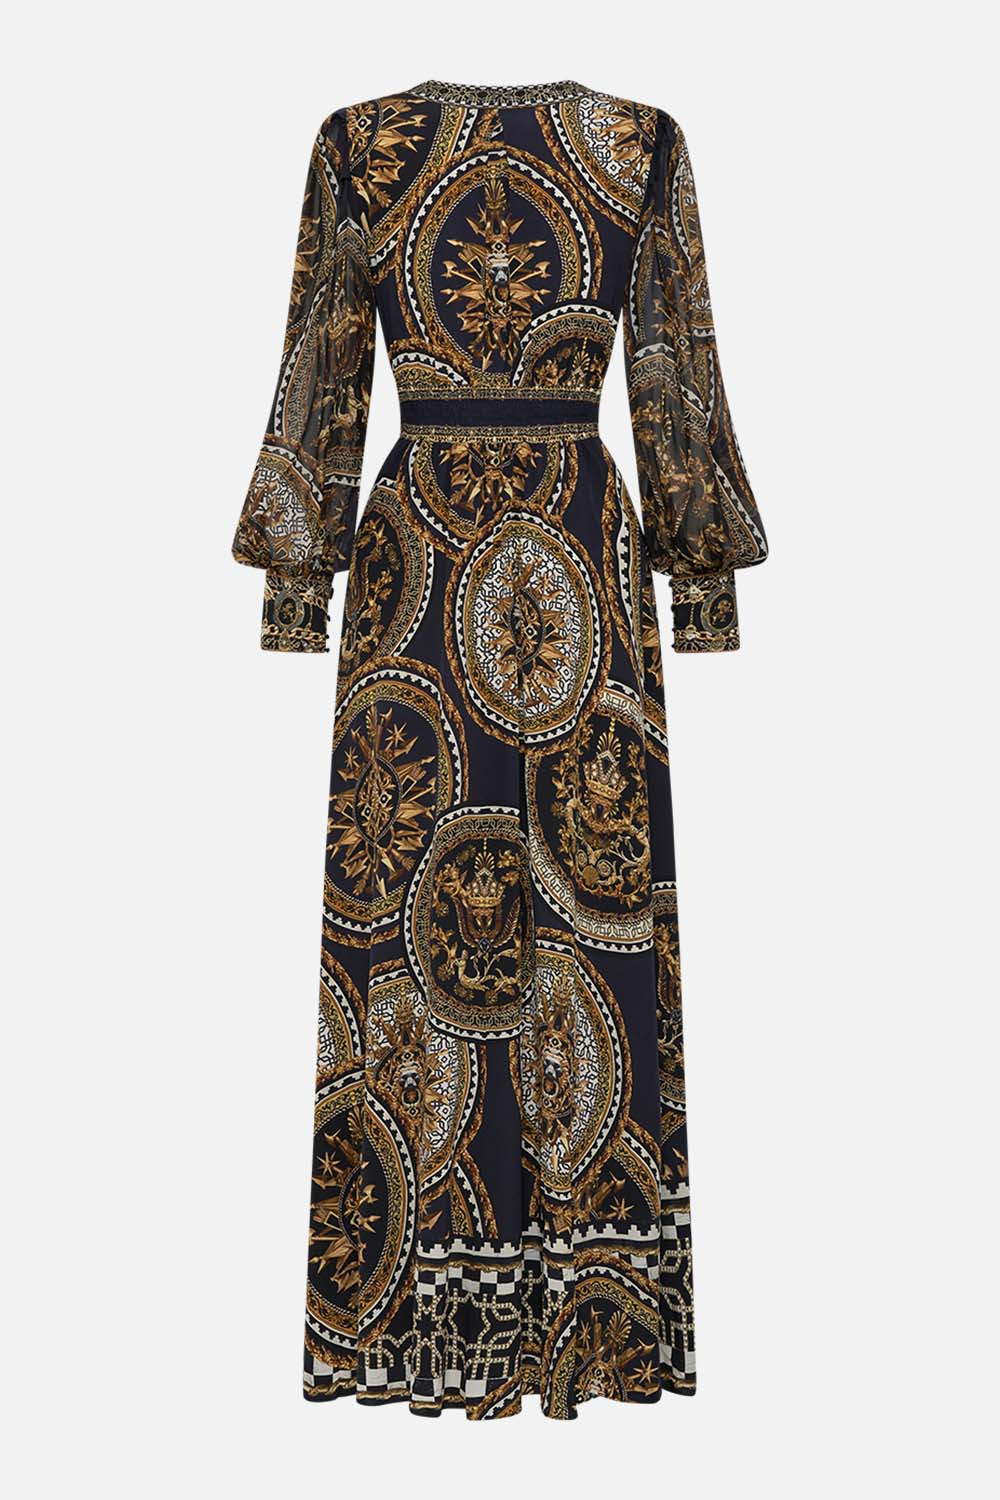 Video of model wearing CAMILLA printed silk dress in Duomo Kaleido print